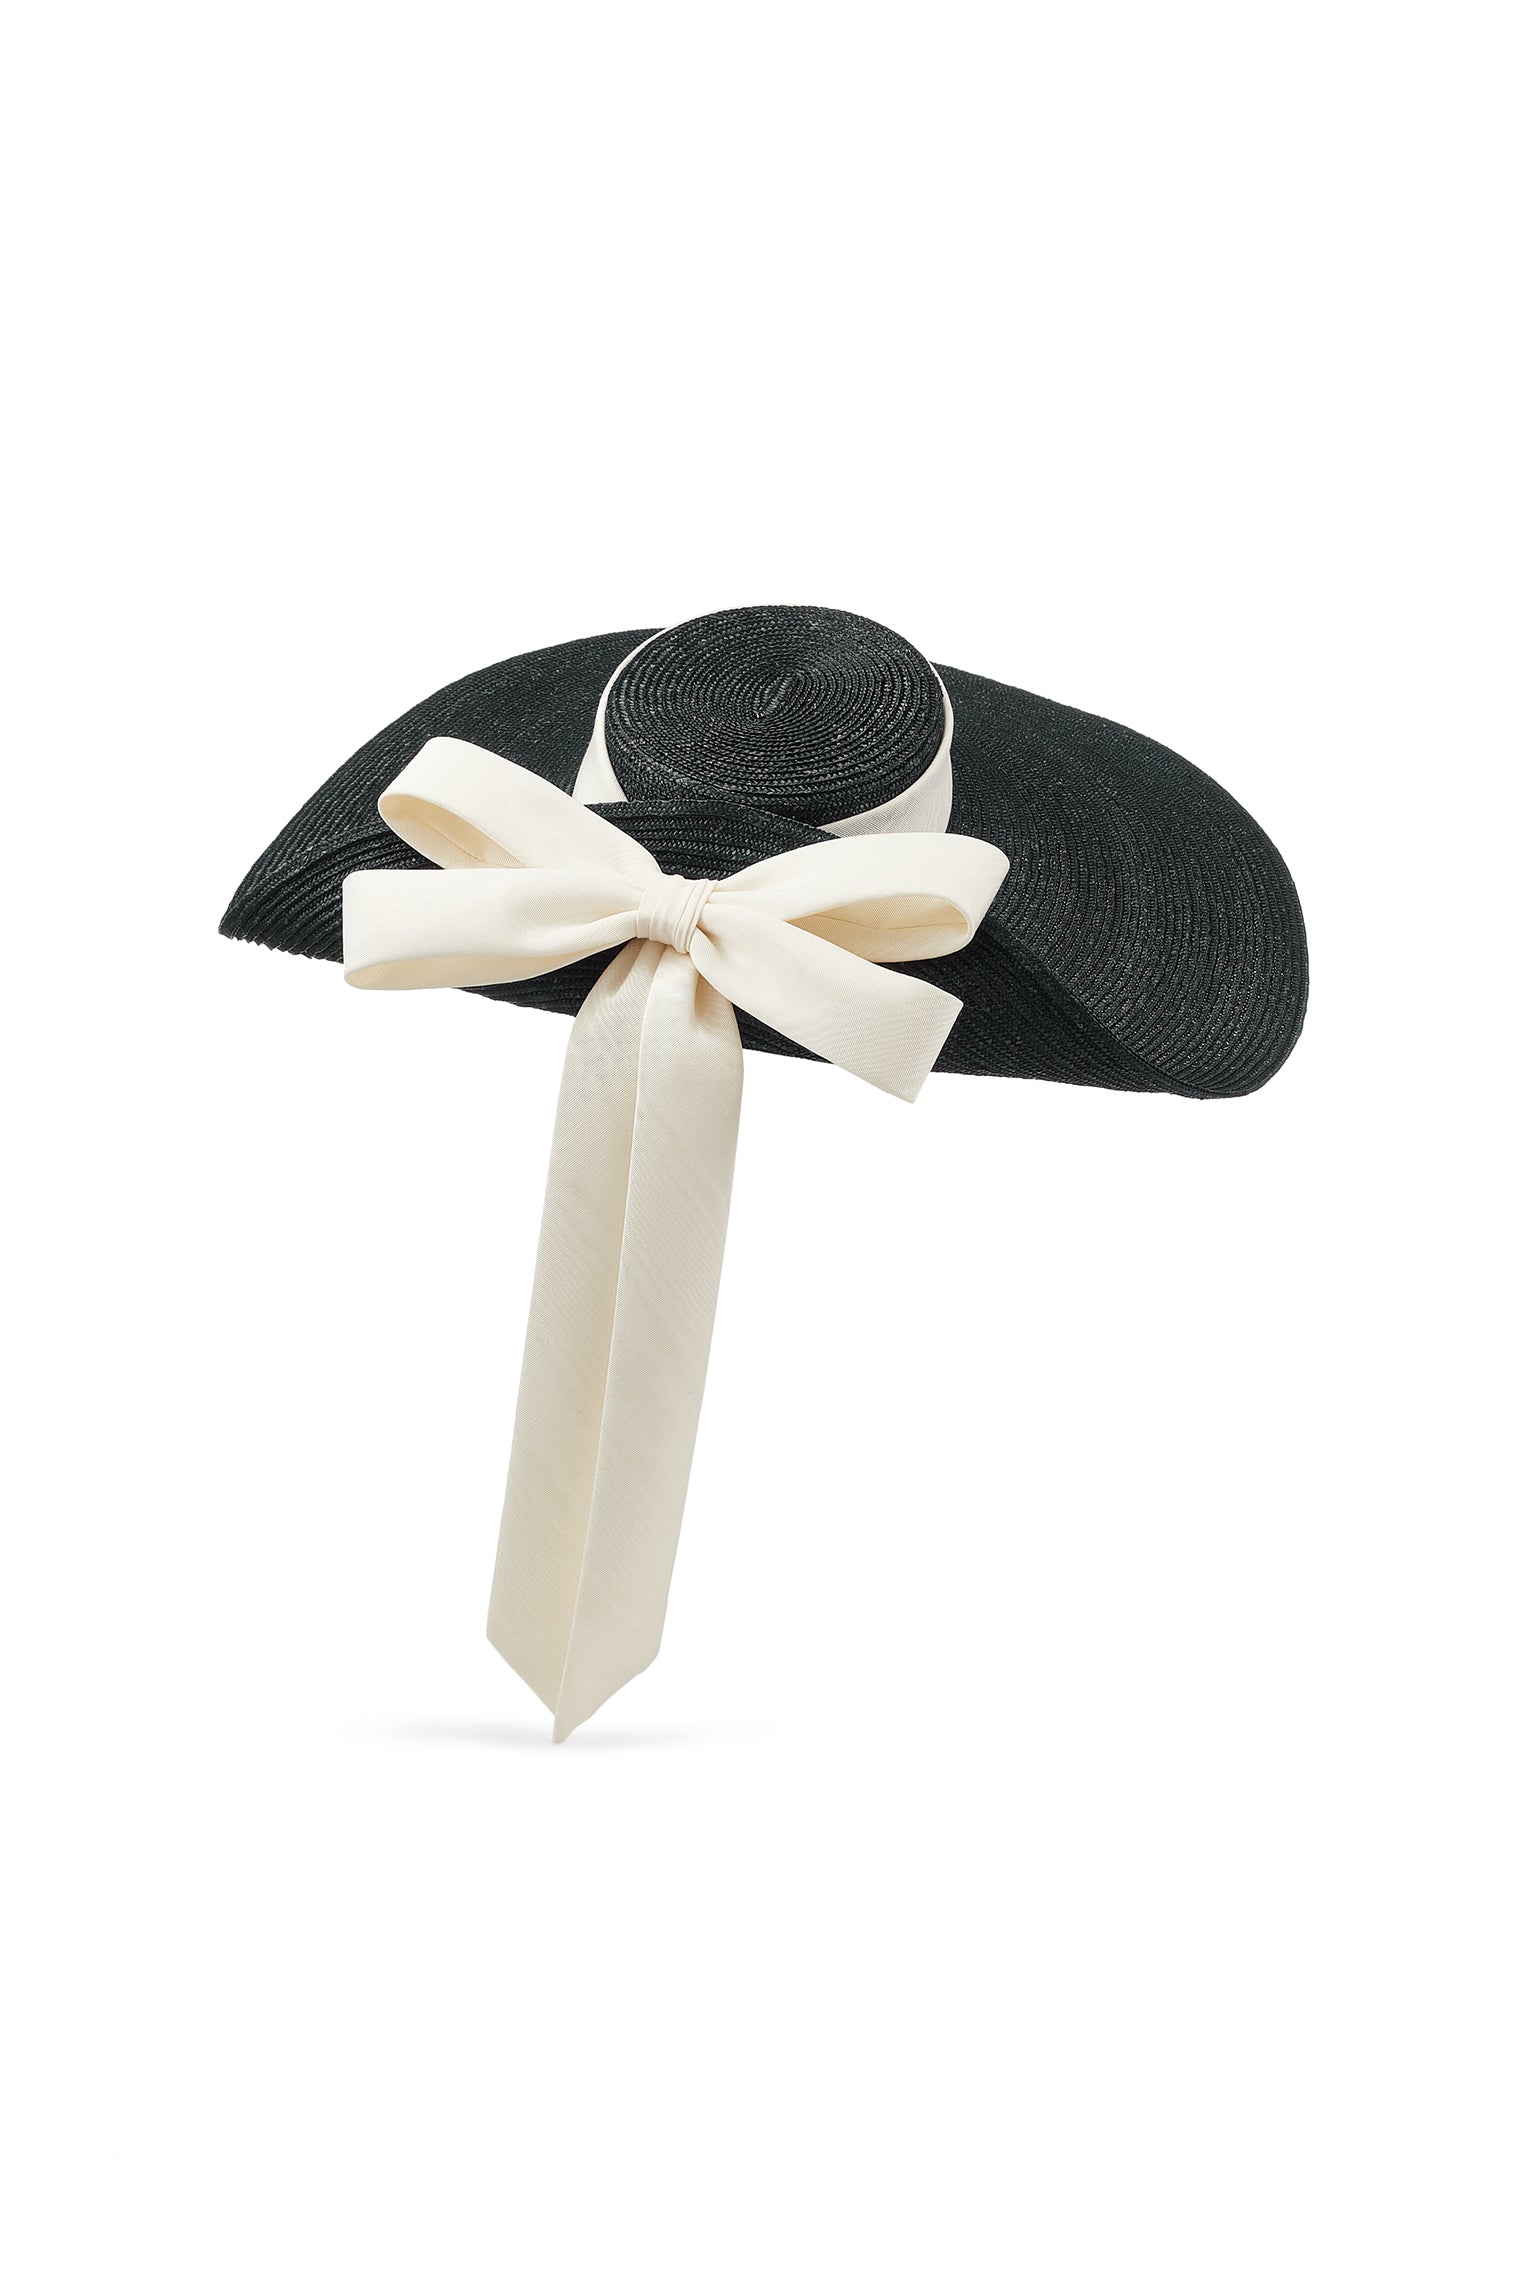 Lady Grey Black Wide Brim Hat - Royal Ascot Hats - Lock & Co. Hatters London UK